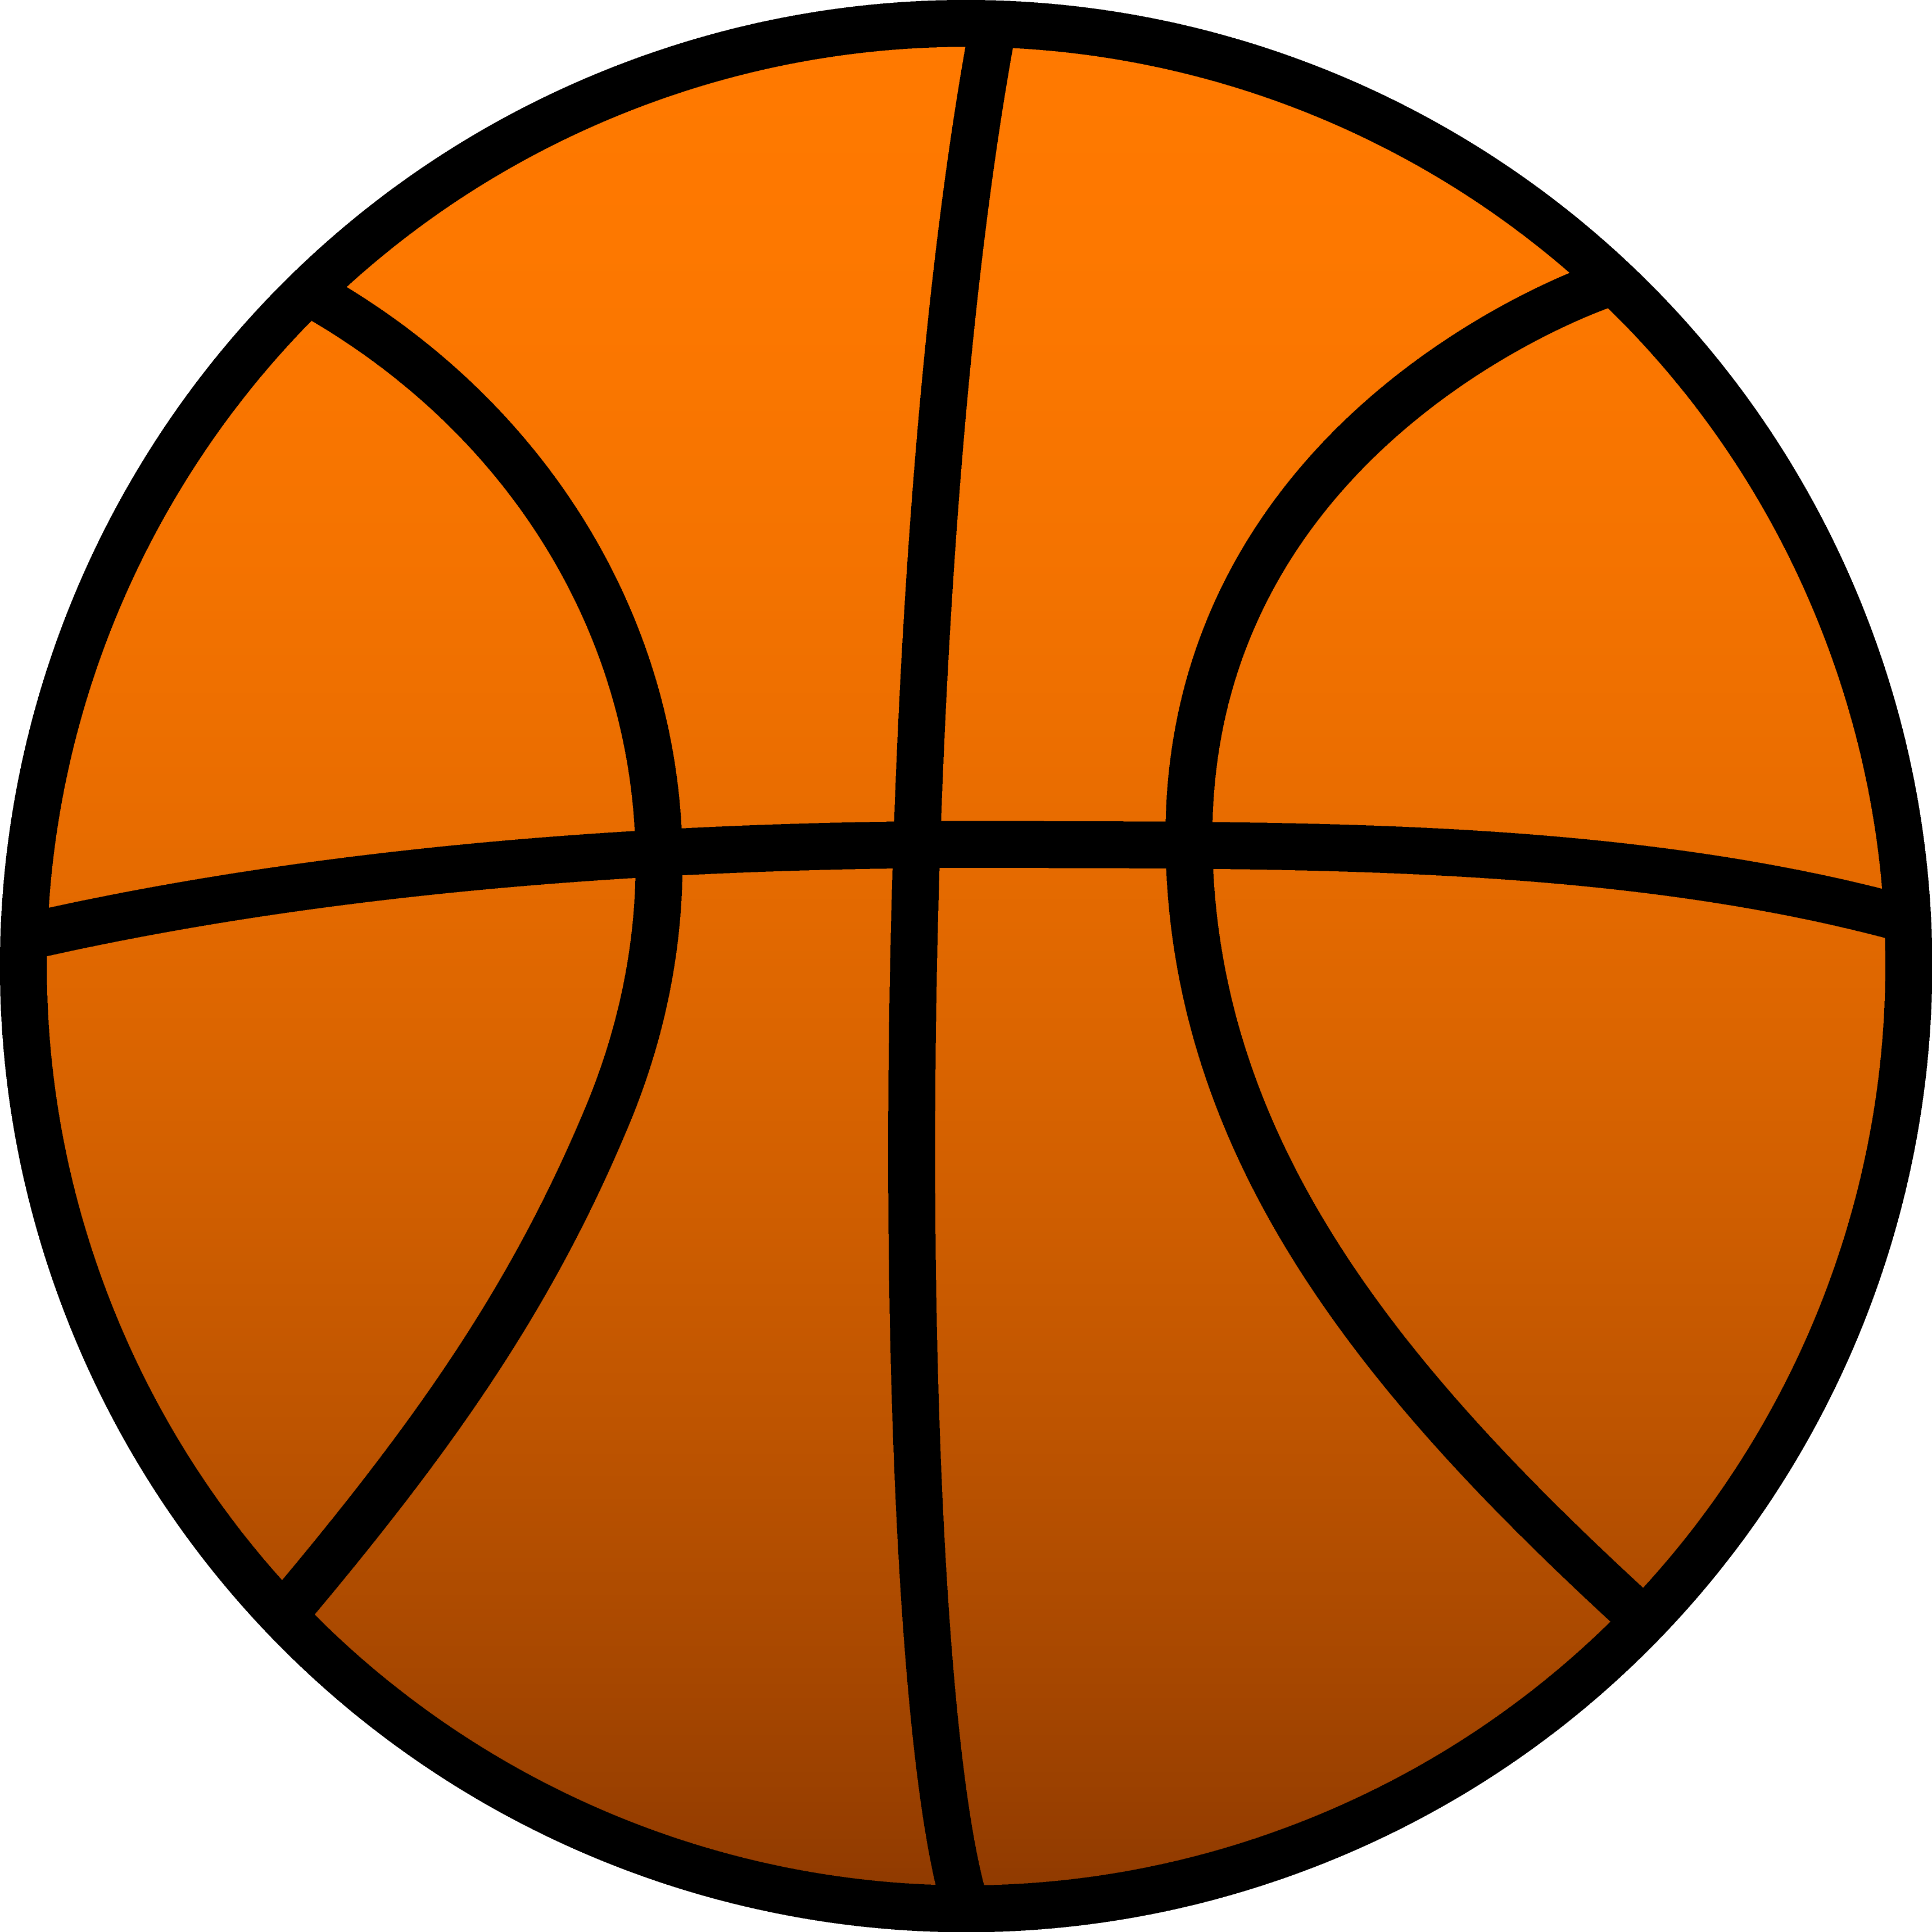 Basketball Clip Art Design